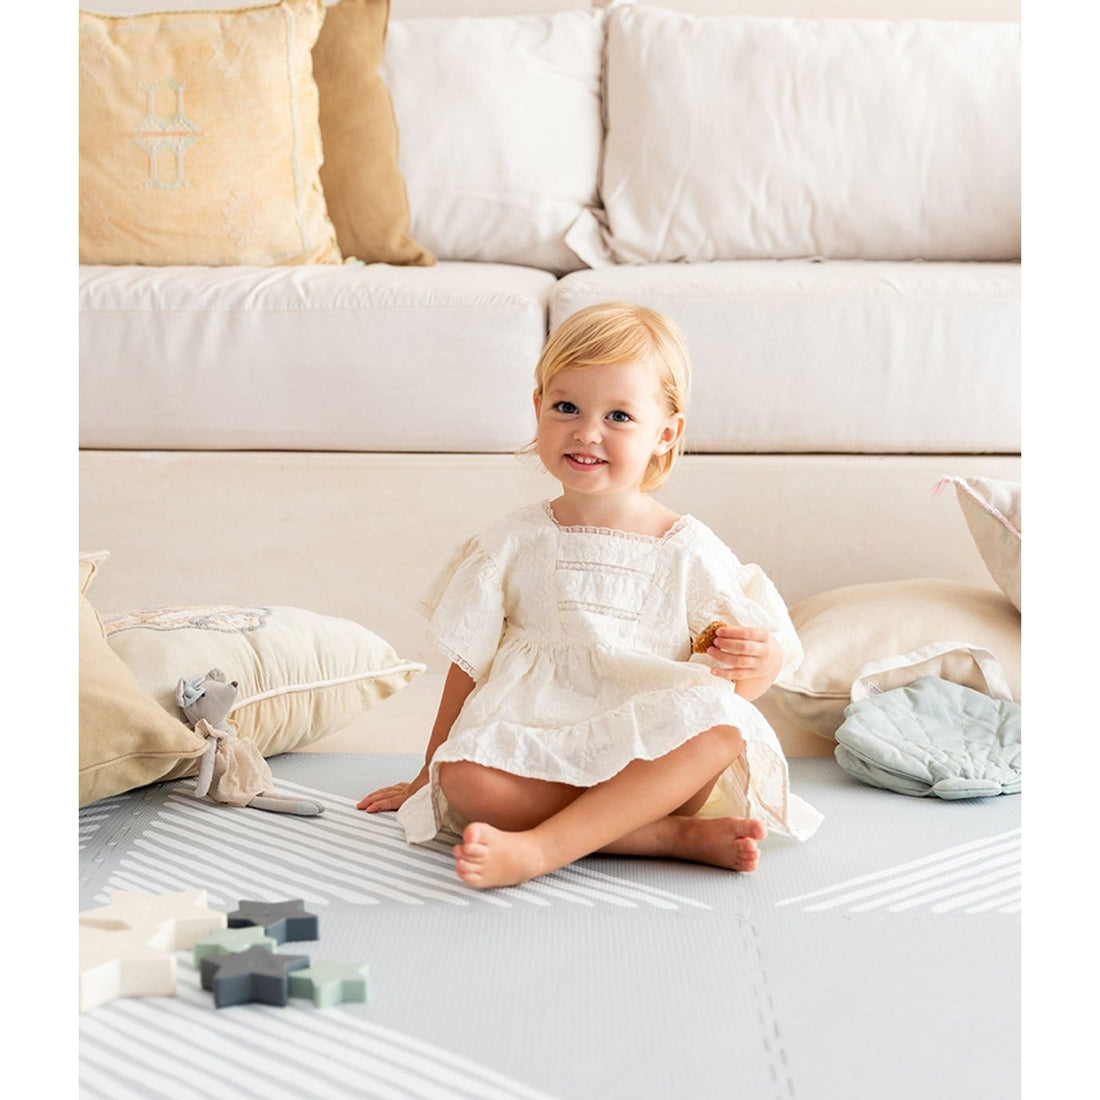 toddlekind-prettier-playmat-sand-line-stone-120x180cm-6-tiles-12-edging-borders-baby-nursery-home-decor-TODK-339065-00_6